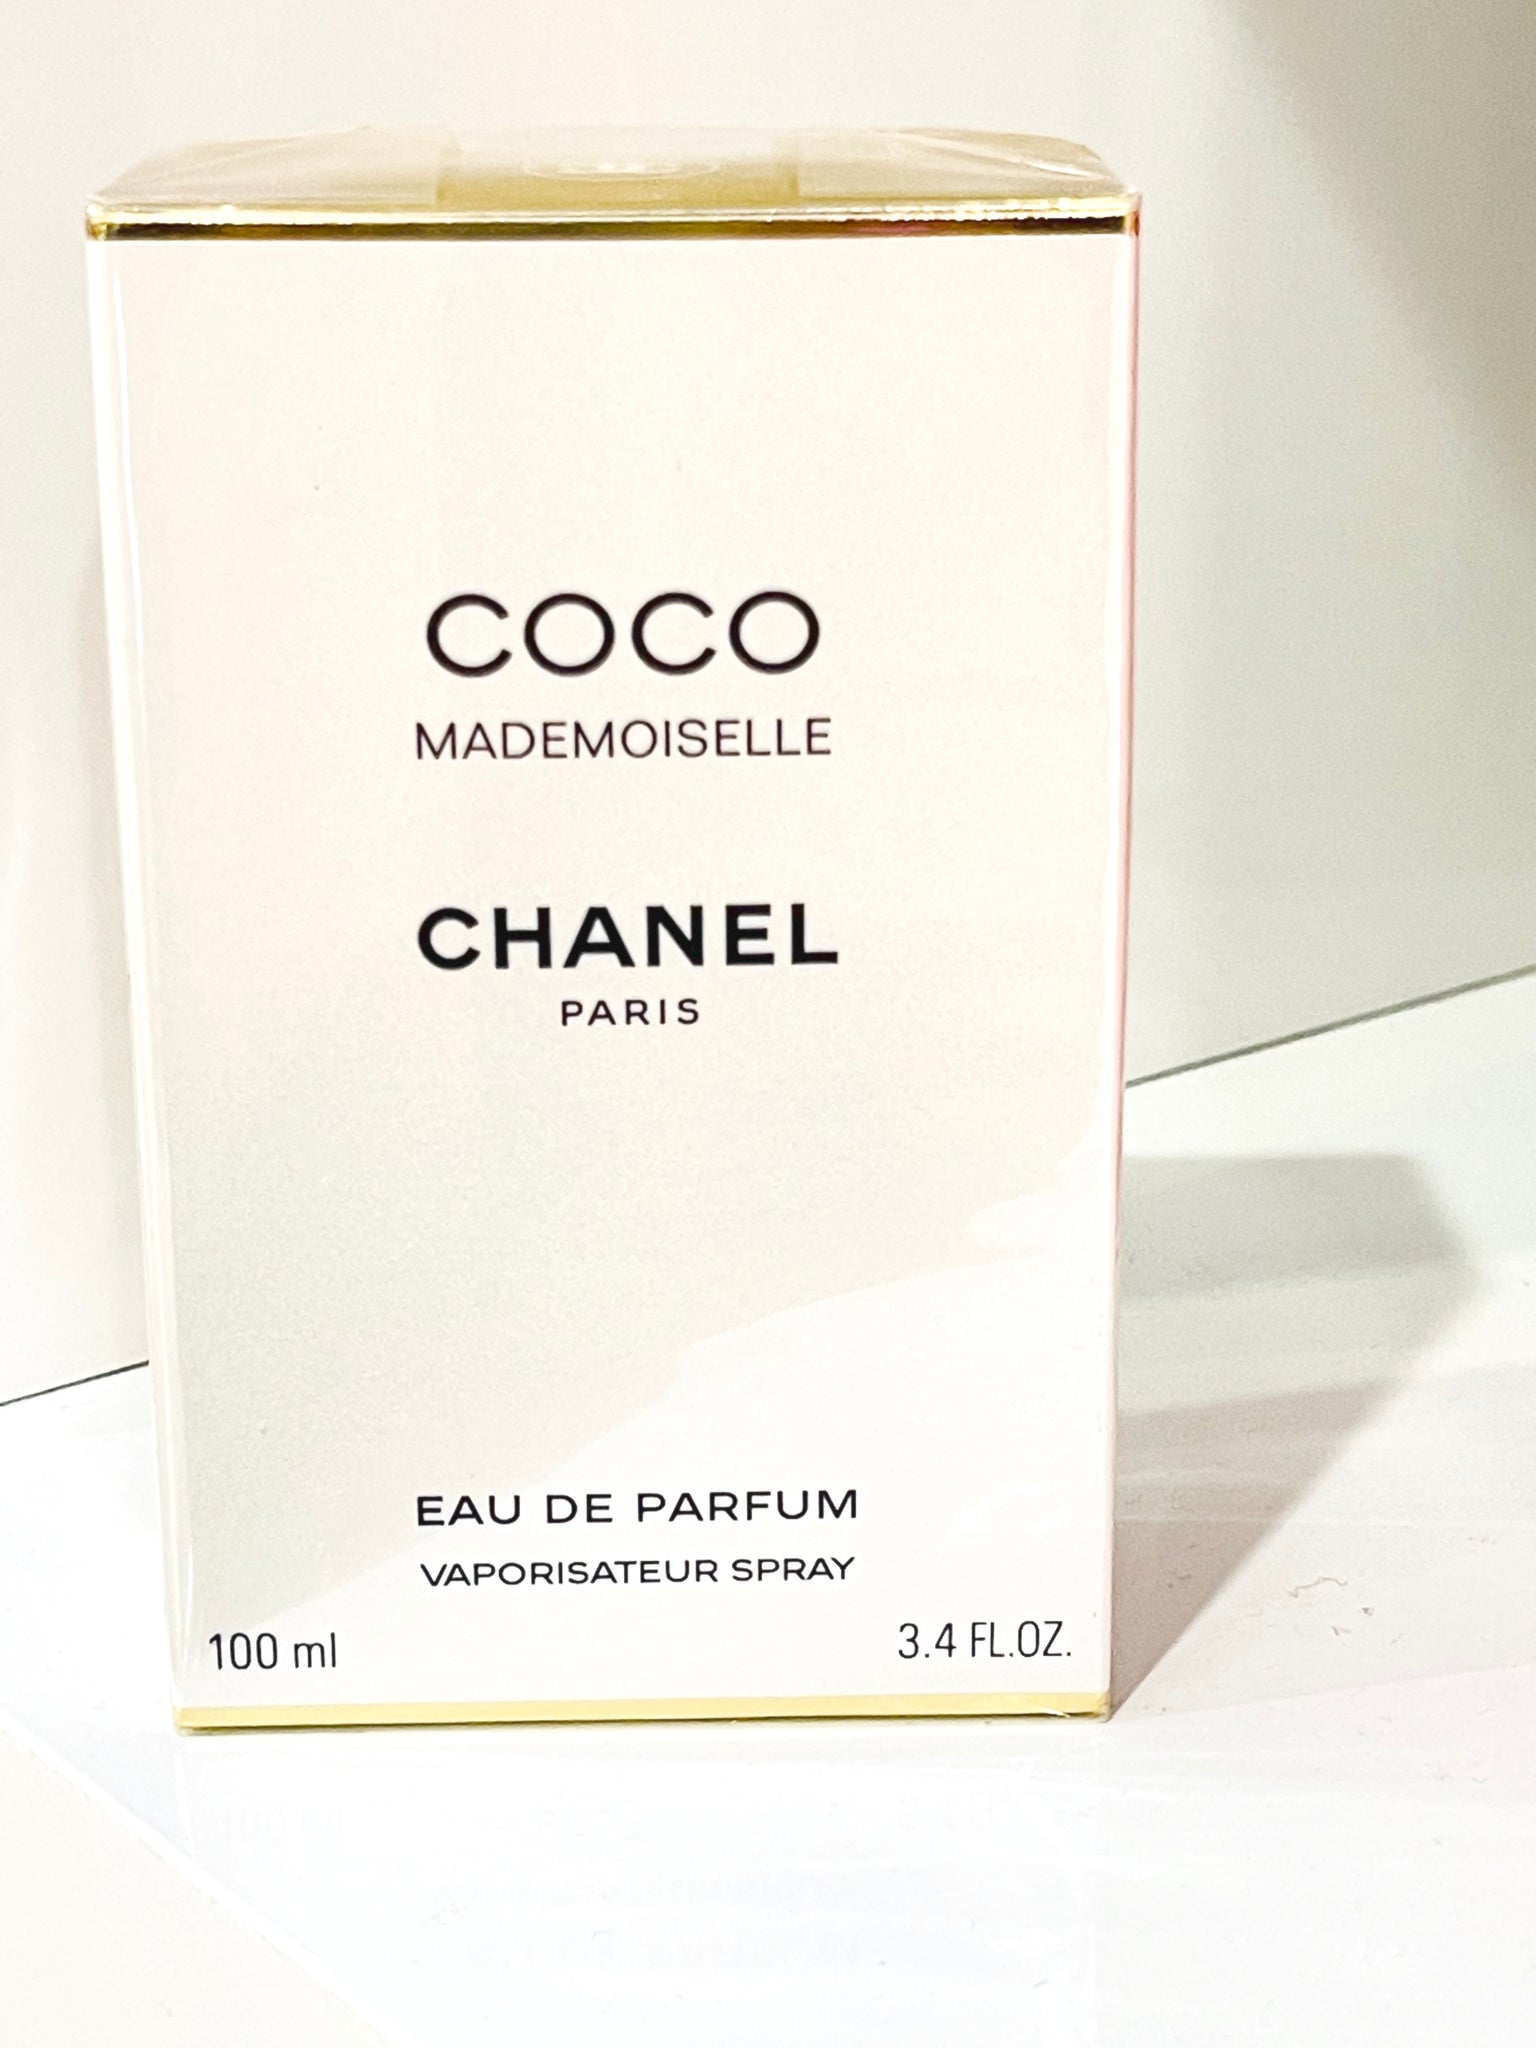 COCO MADEMOISELLE Eau de Parfum Spray (EDP) - 3.4 FL. OZ.